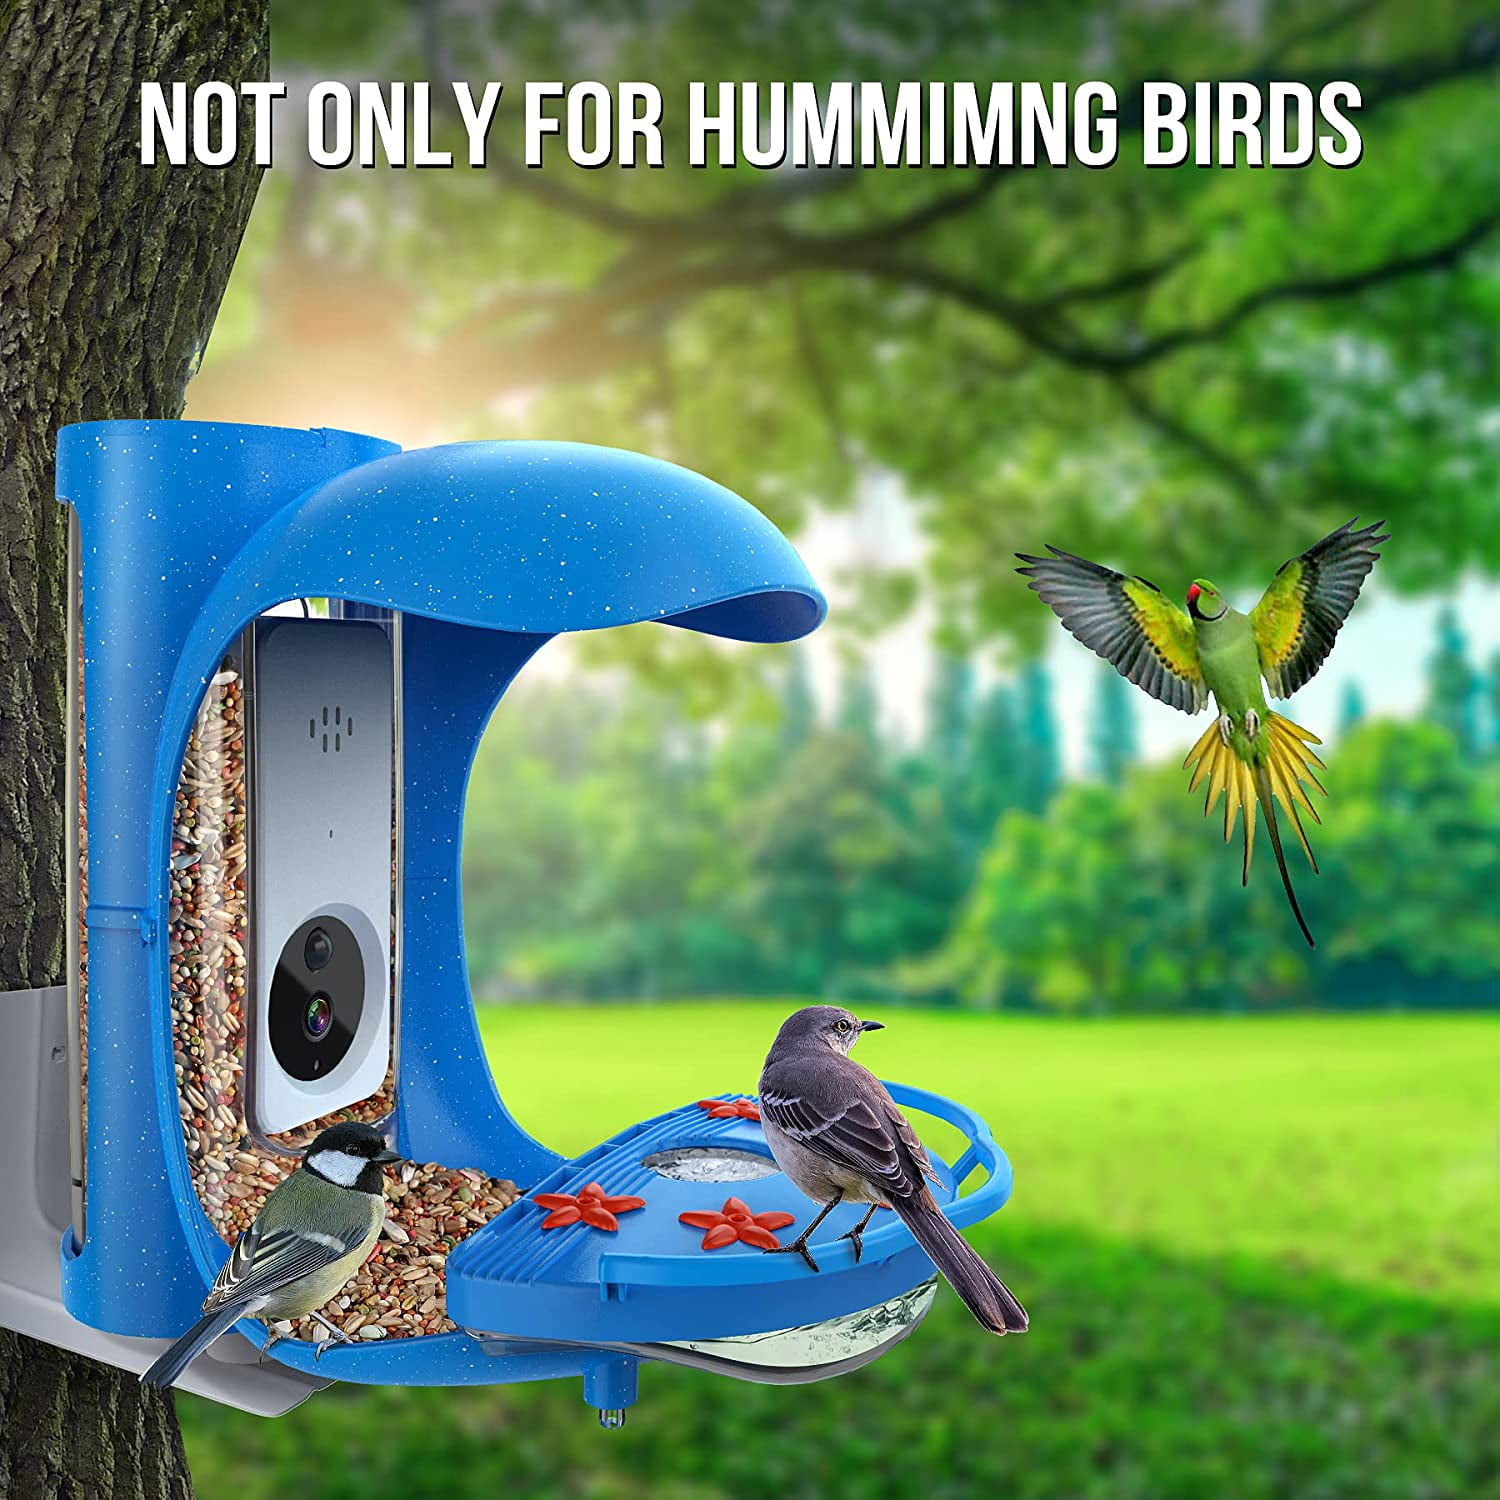 Take Glamor Shots of Hummingbirds With the New Bird Buddy Feeder